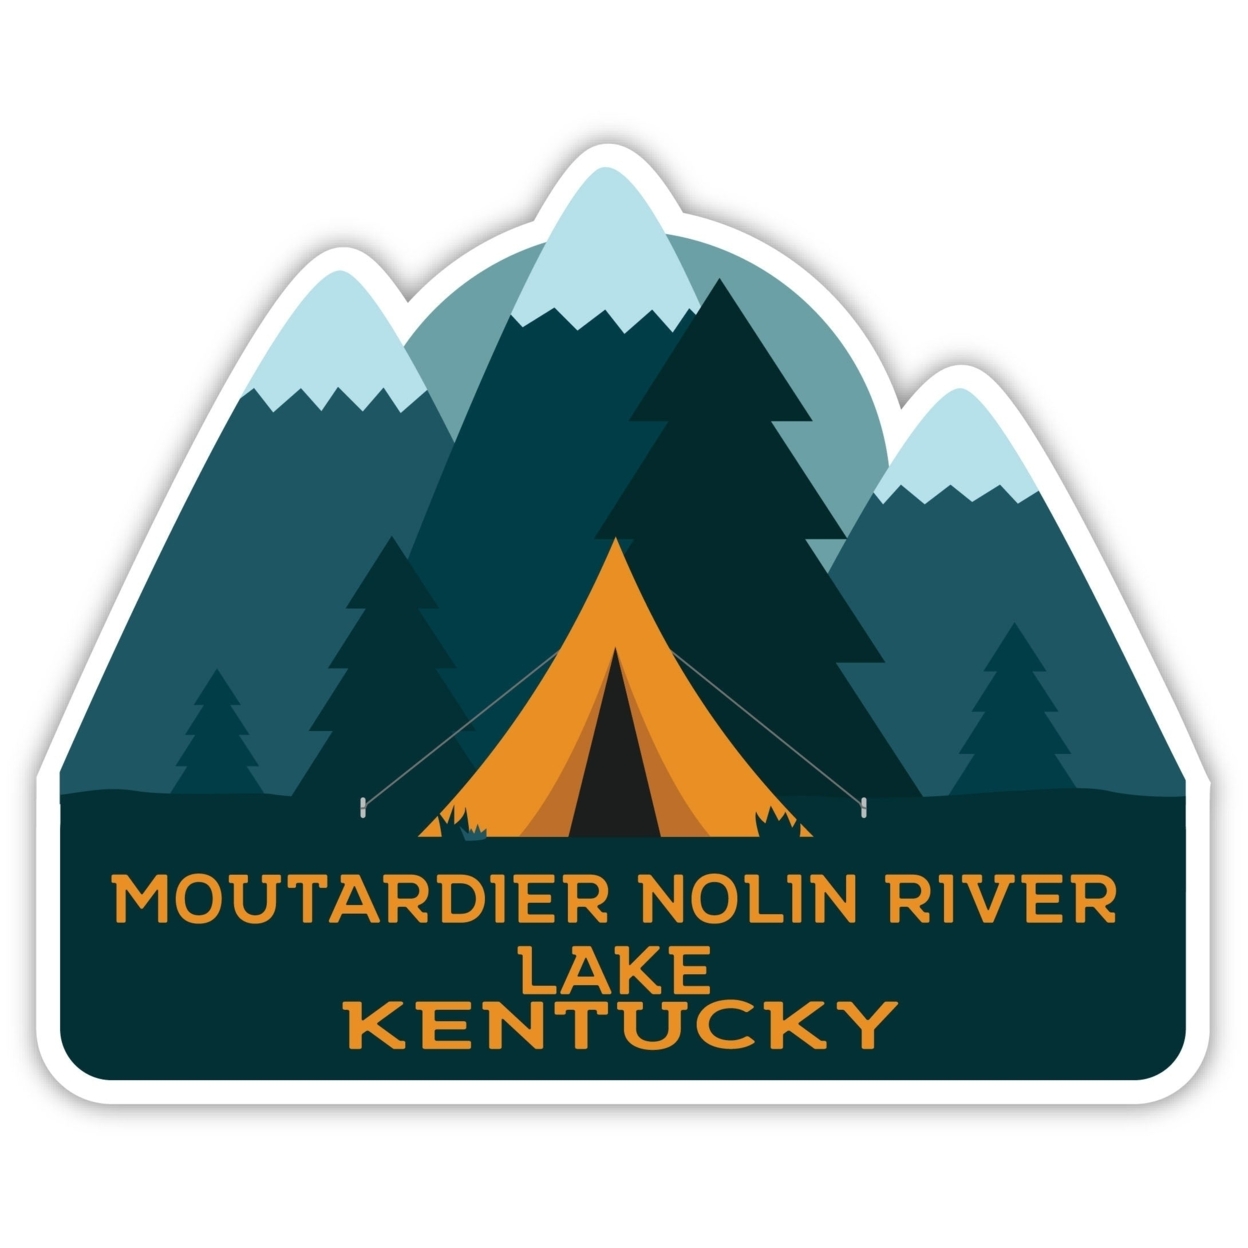 Moutardier Nolin River Lake Kentucky Souvenir Decorative Stickers (Choose Theme And Size) - Single Unit, 2-Inch, Tent